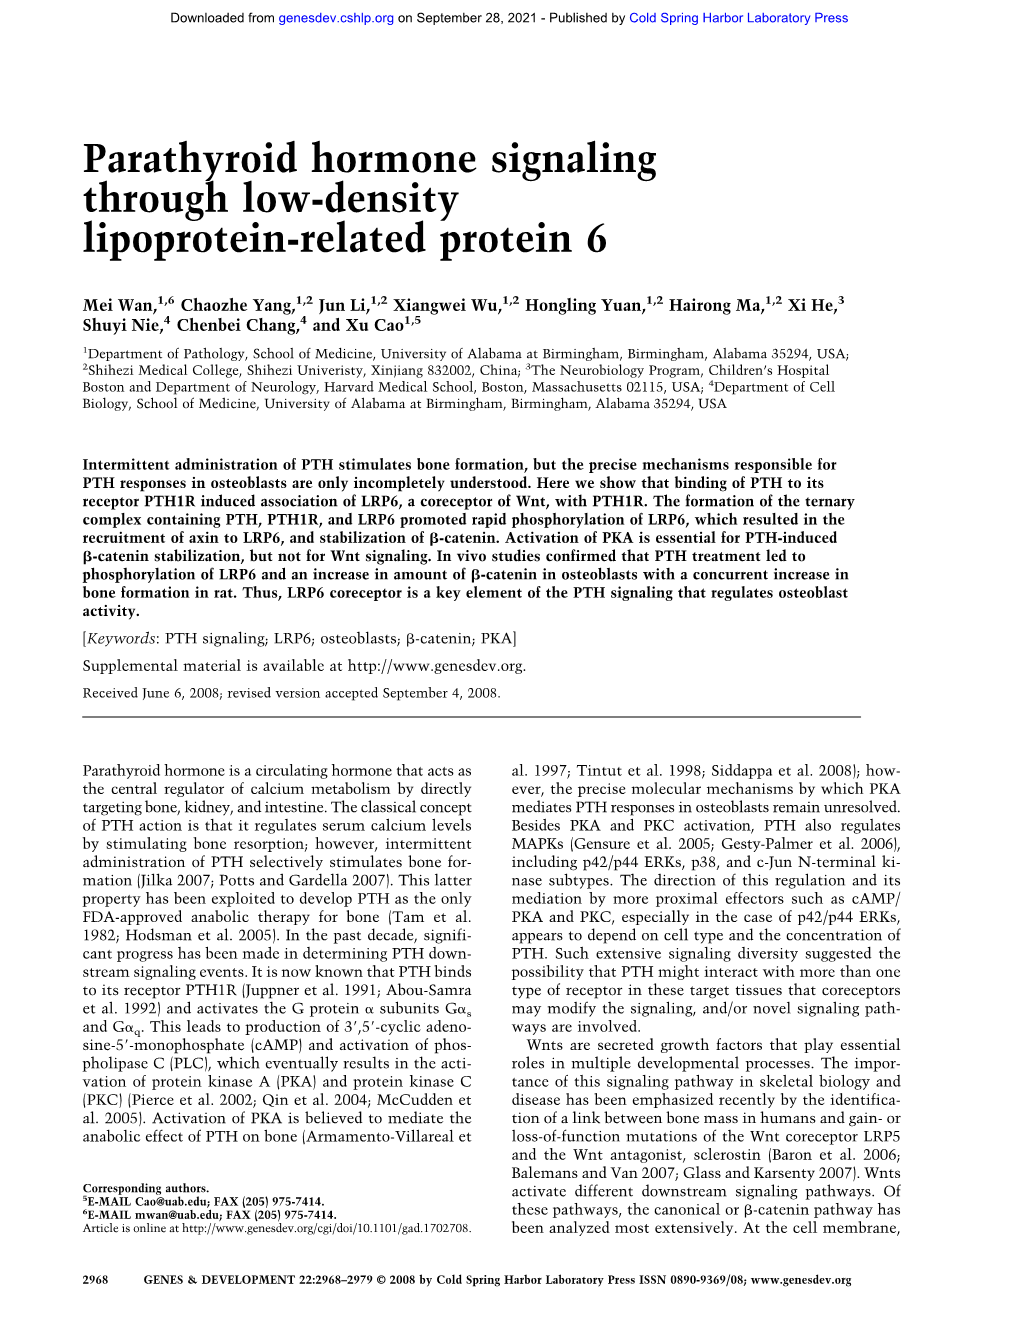 Parathyroid Hormone Signaling Through Low-Density Lipoprotein-Related Protein 6